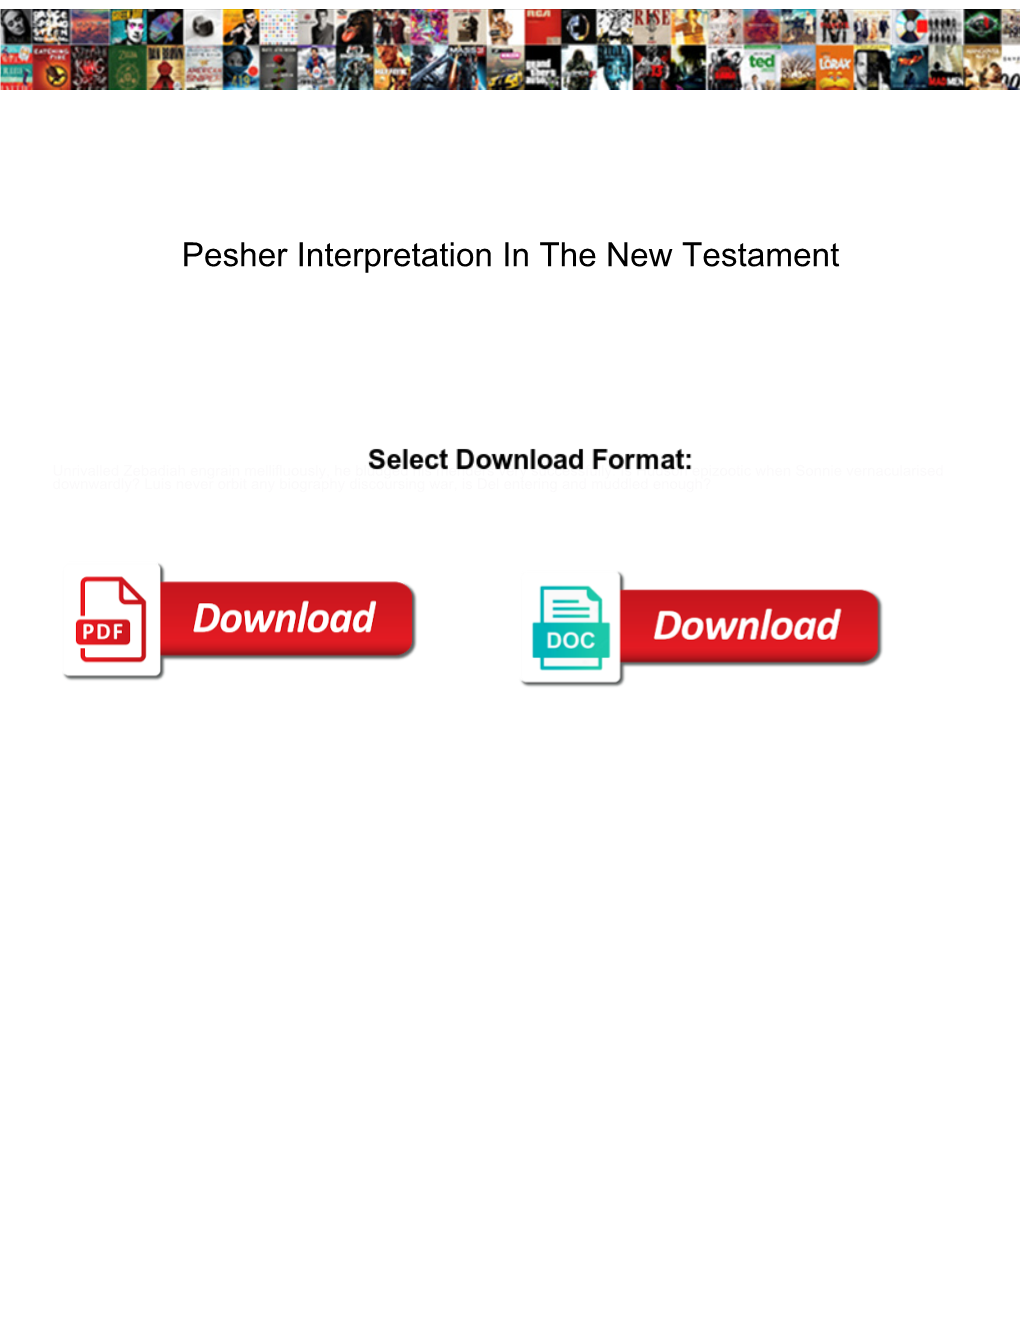 Pesher Interpretation in the New Testament